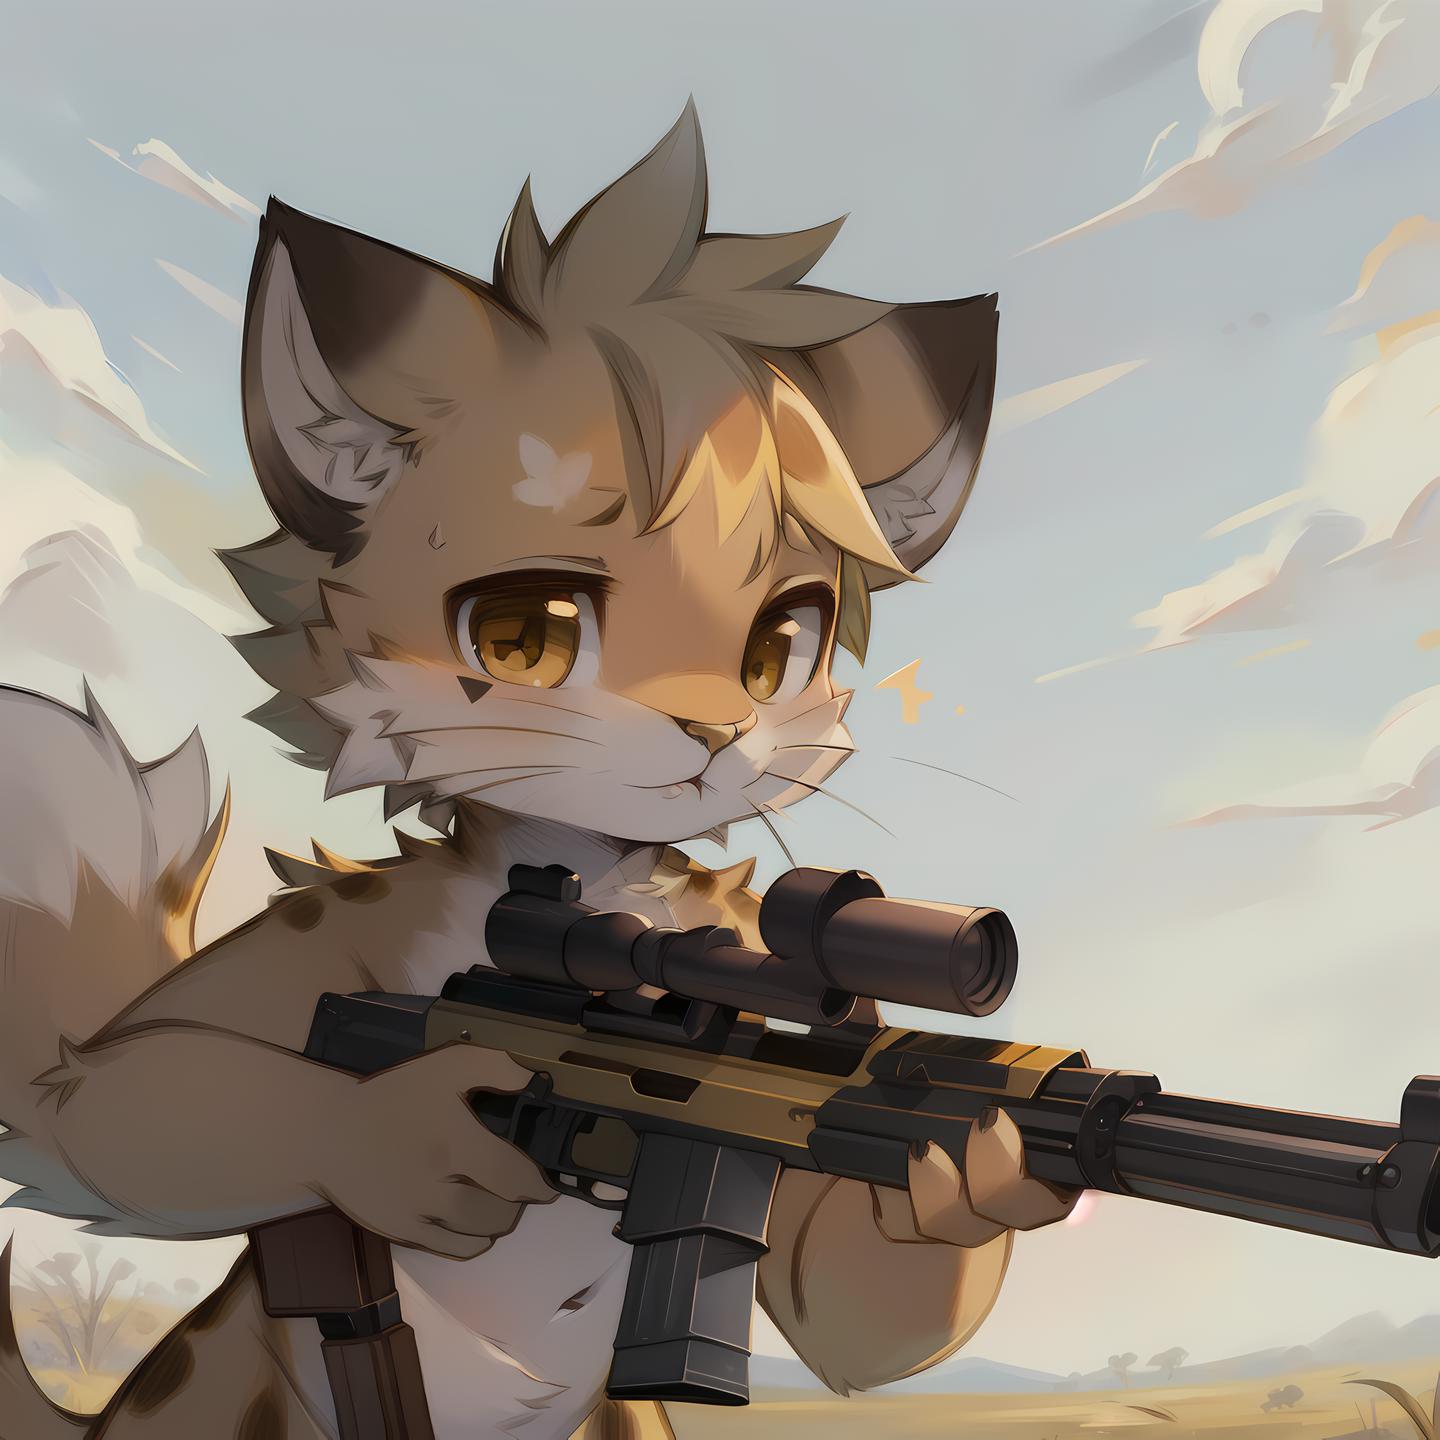 A cartoon kitten holding a gun and looking sad.